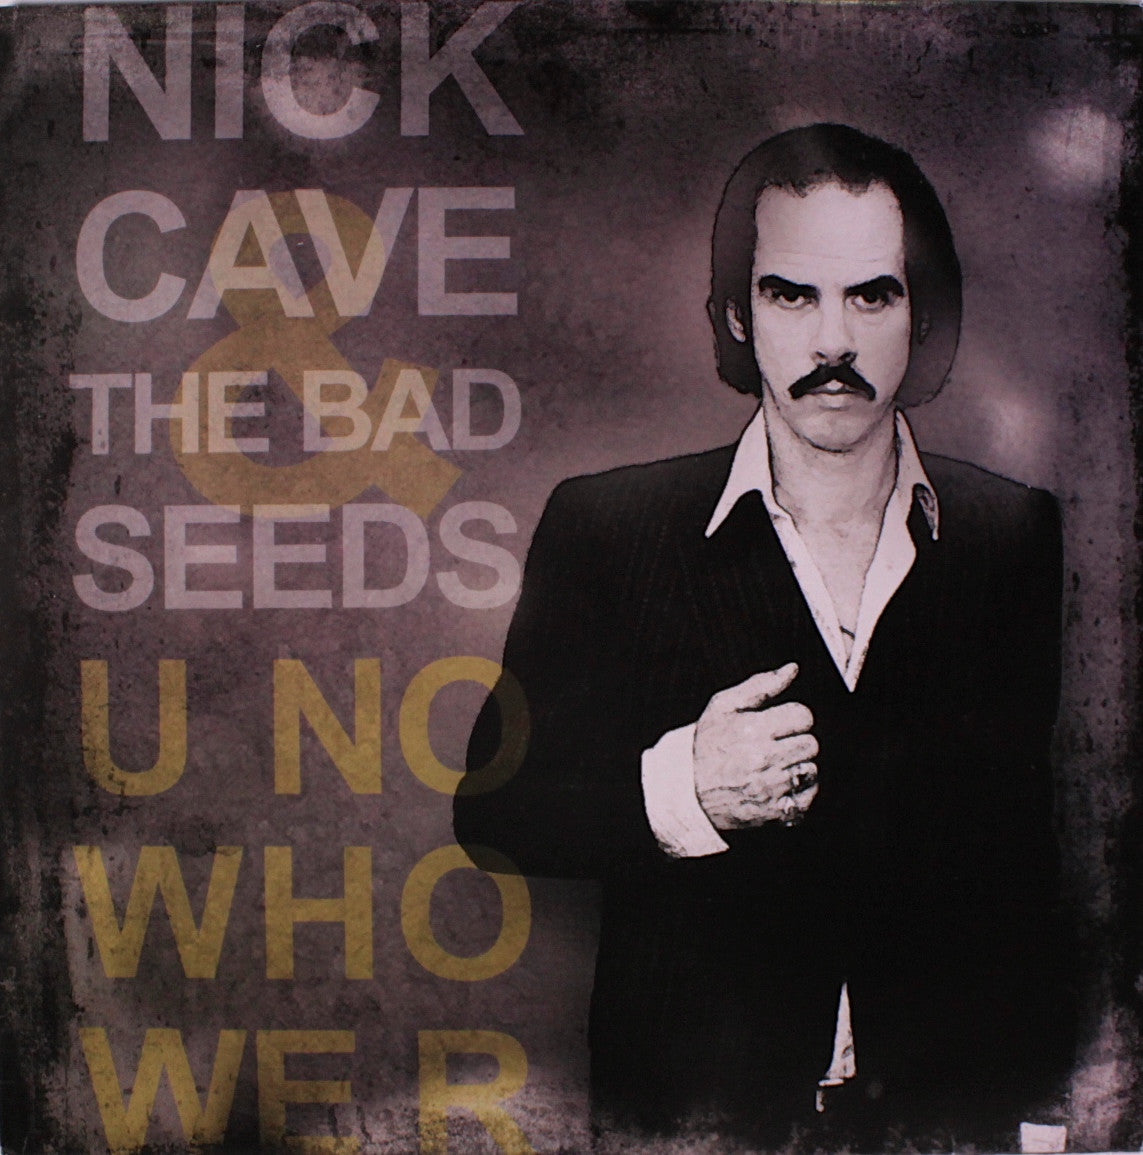 Cave, Nick & The Bad Seeds - U No Who We R